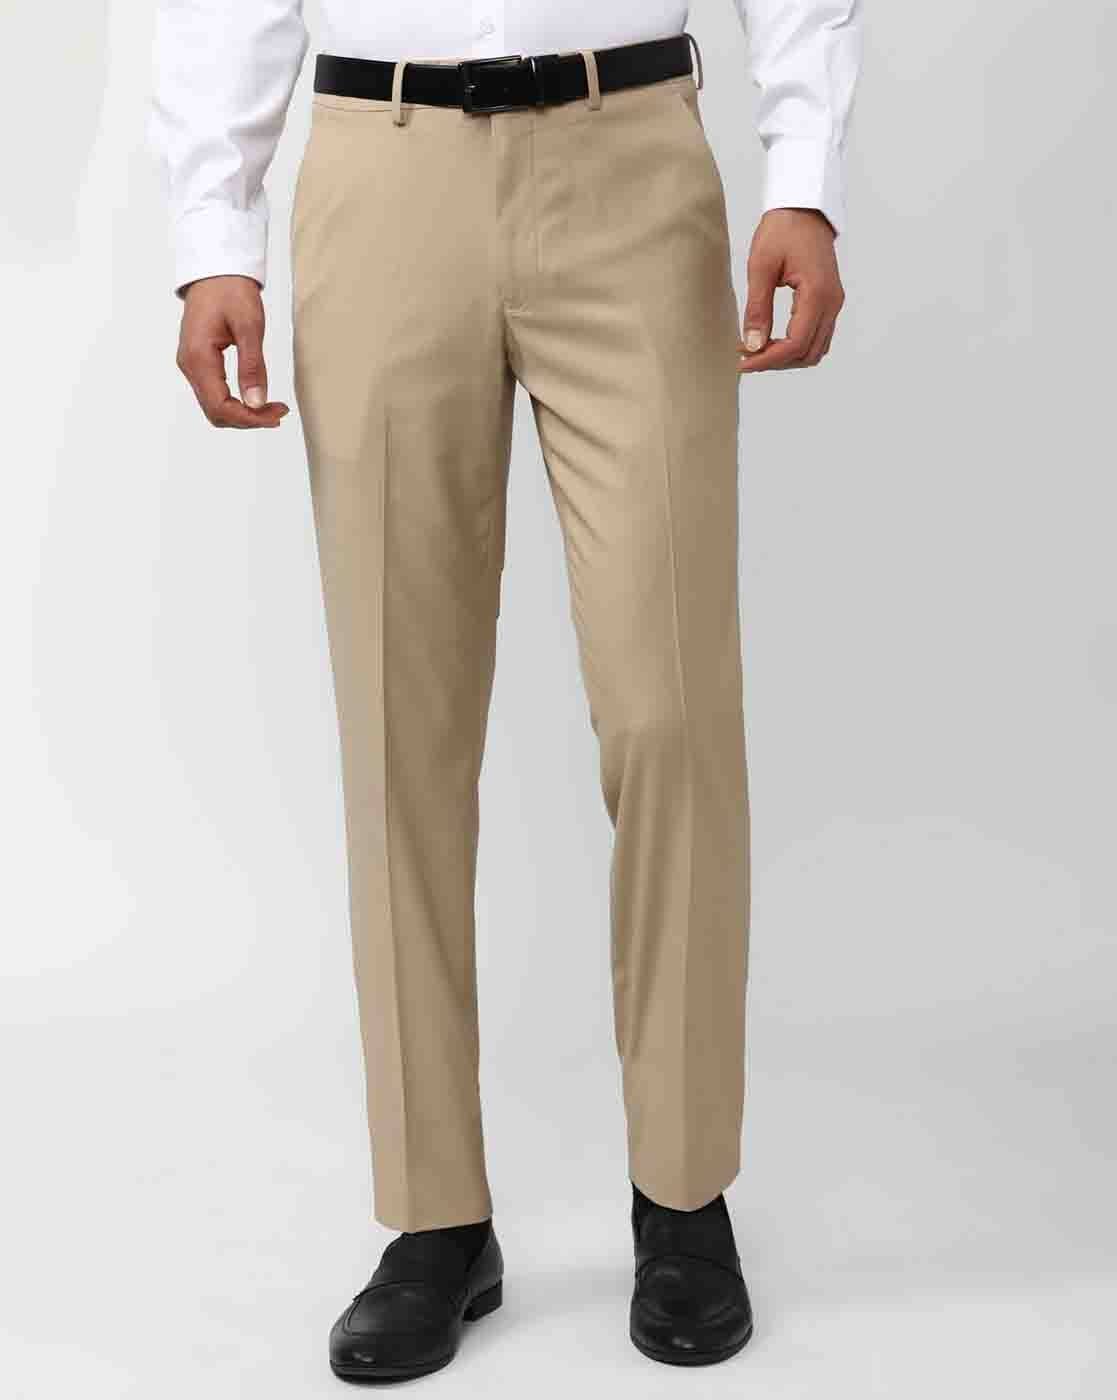 Slim Comfort B-95 Formal Beige Textured Trouser - Mandis